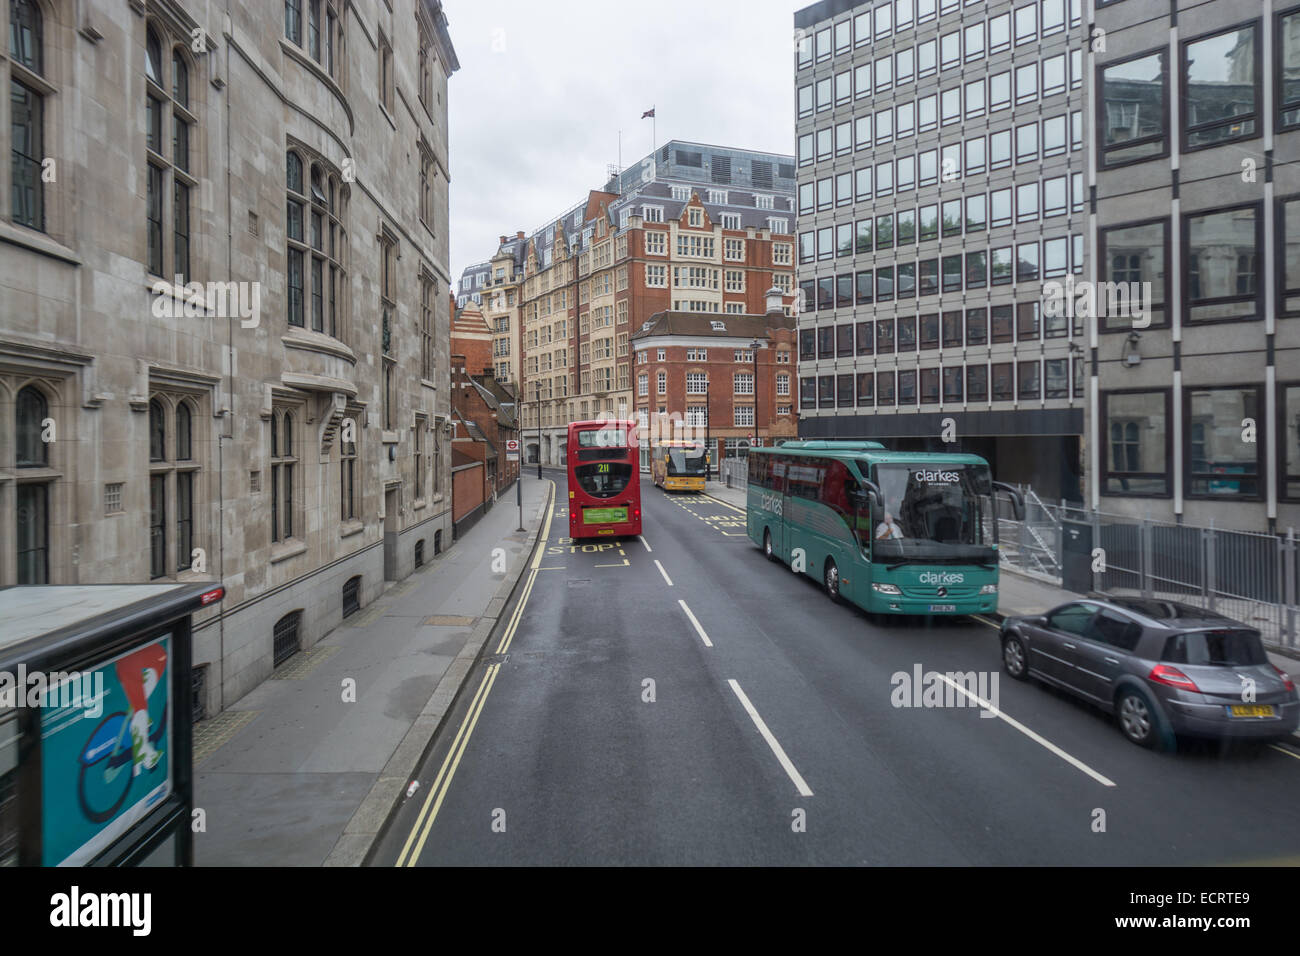 Typical London street scene Stock Photo - Alamy